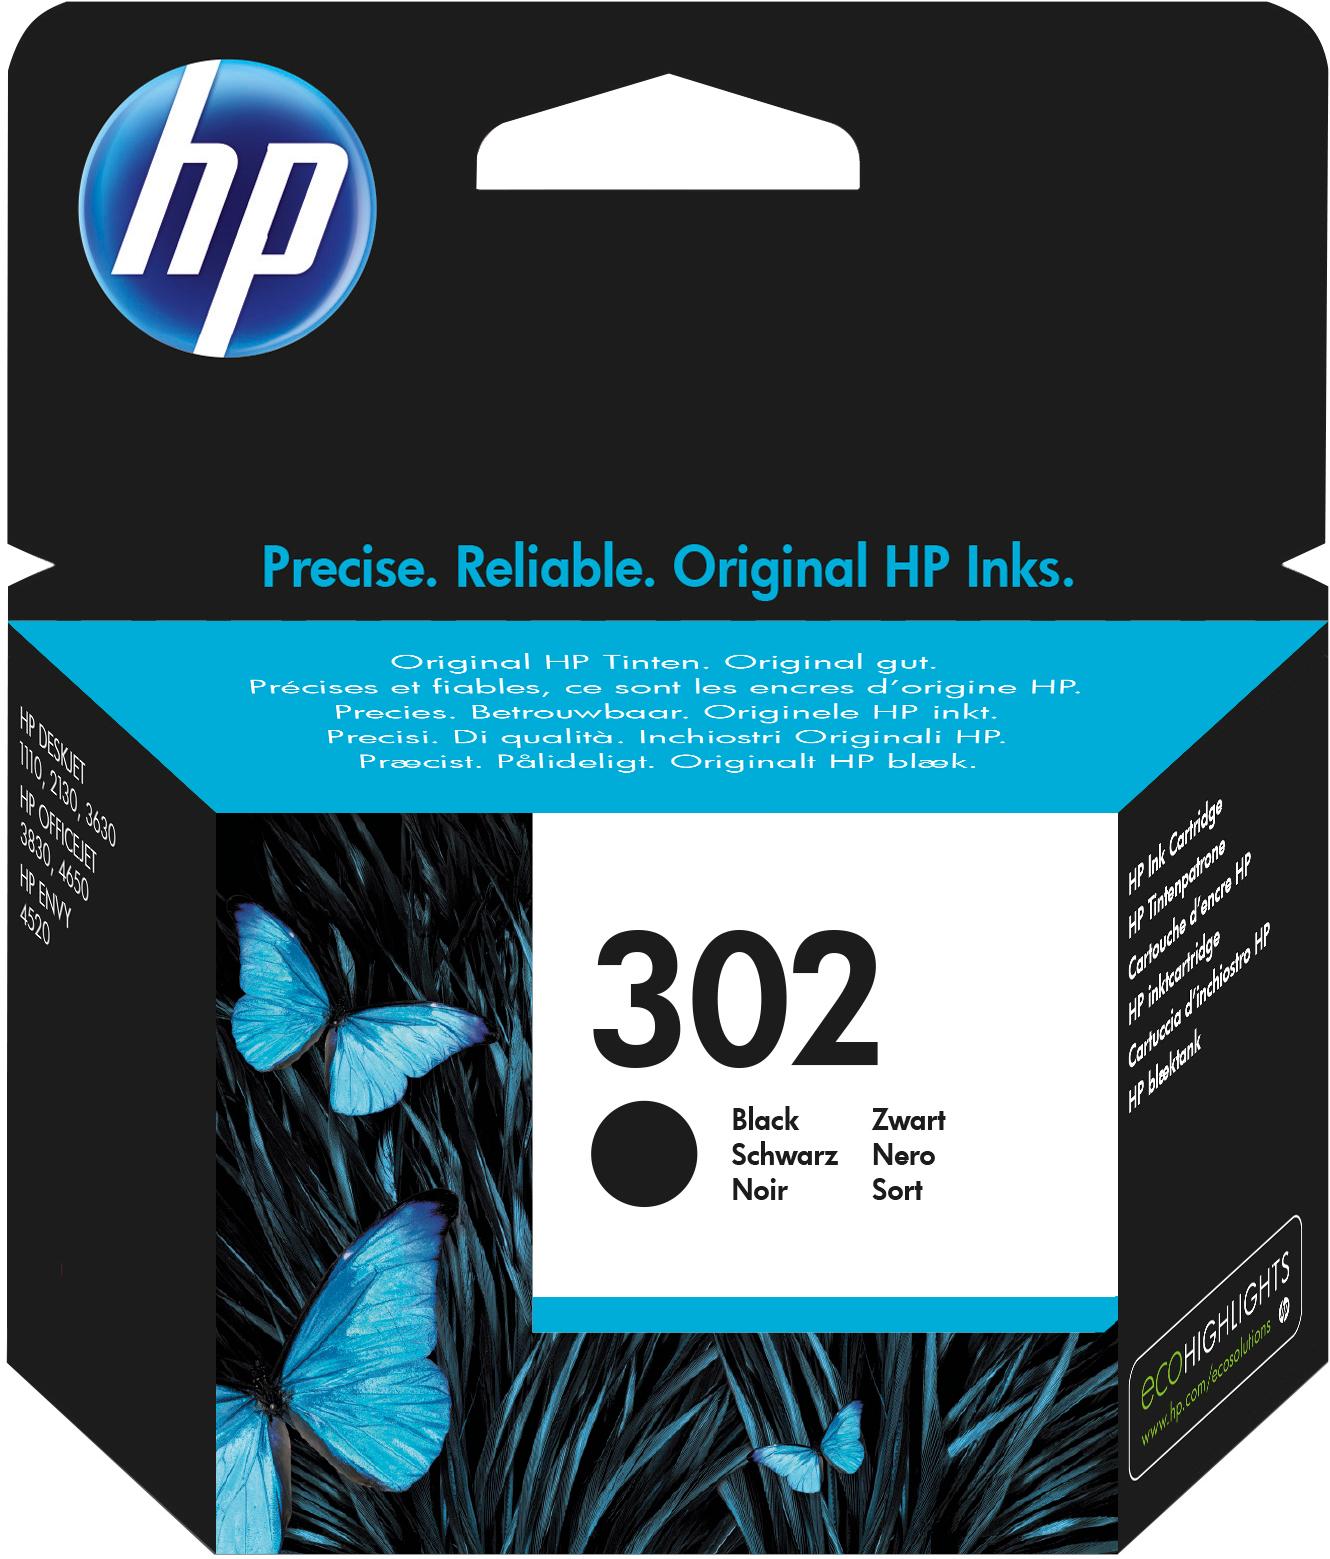 HP 302 - Noir à 22.9€ - Generation Net